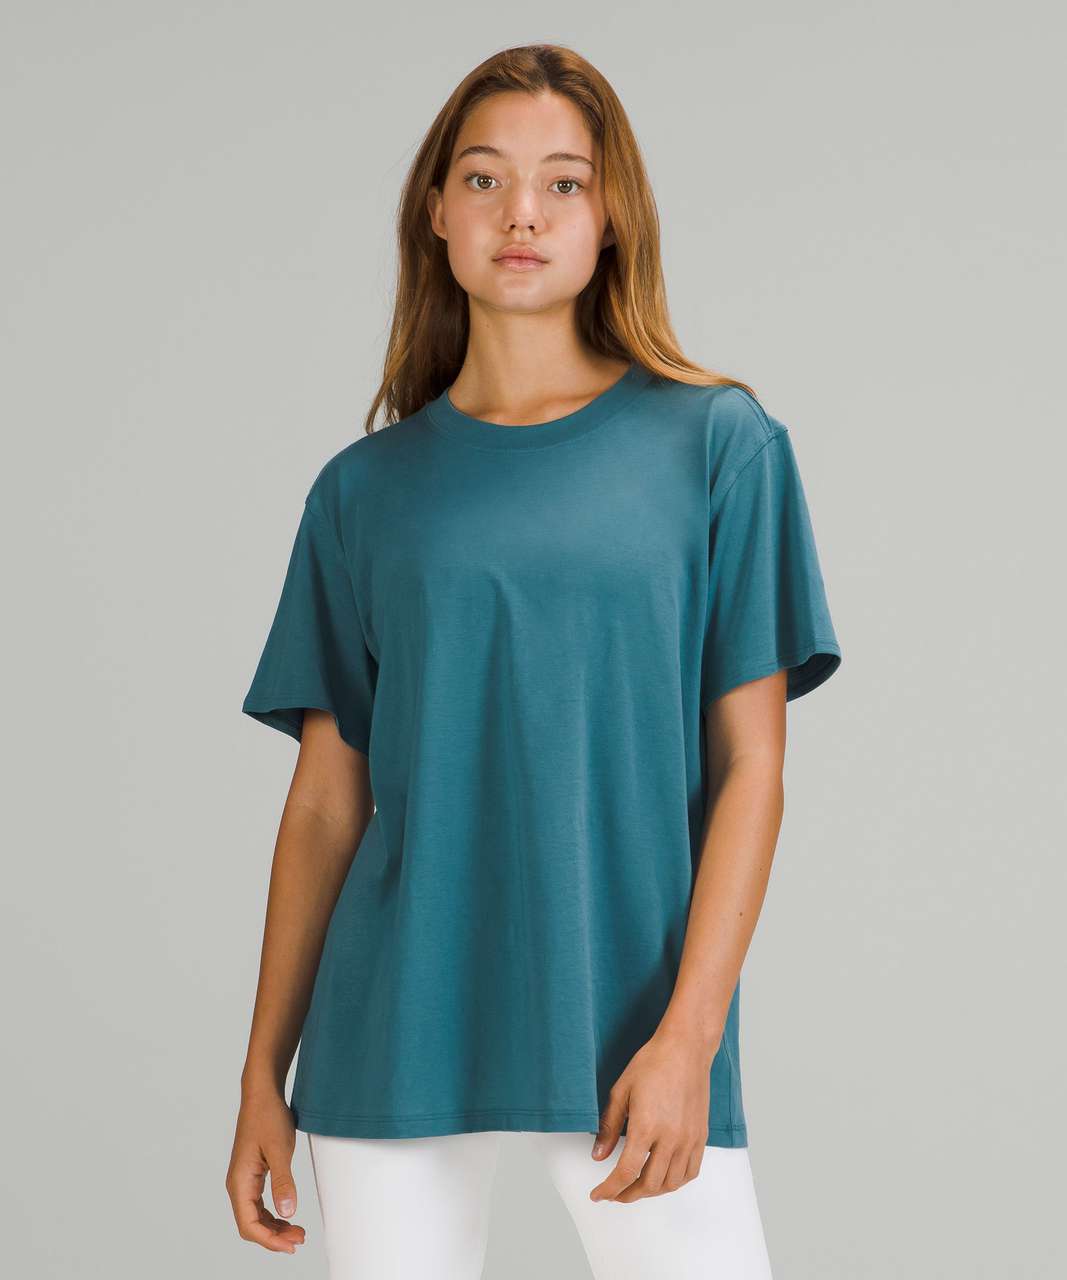 Lululemon All Yours Short Sleeve T-Shirt - Capture Blue